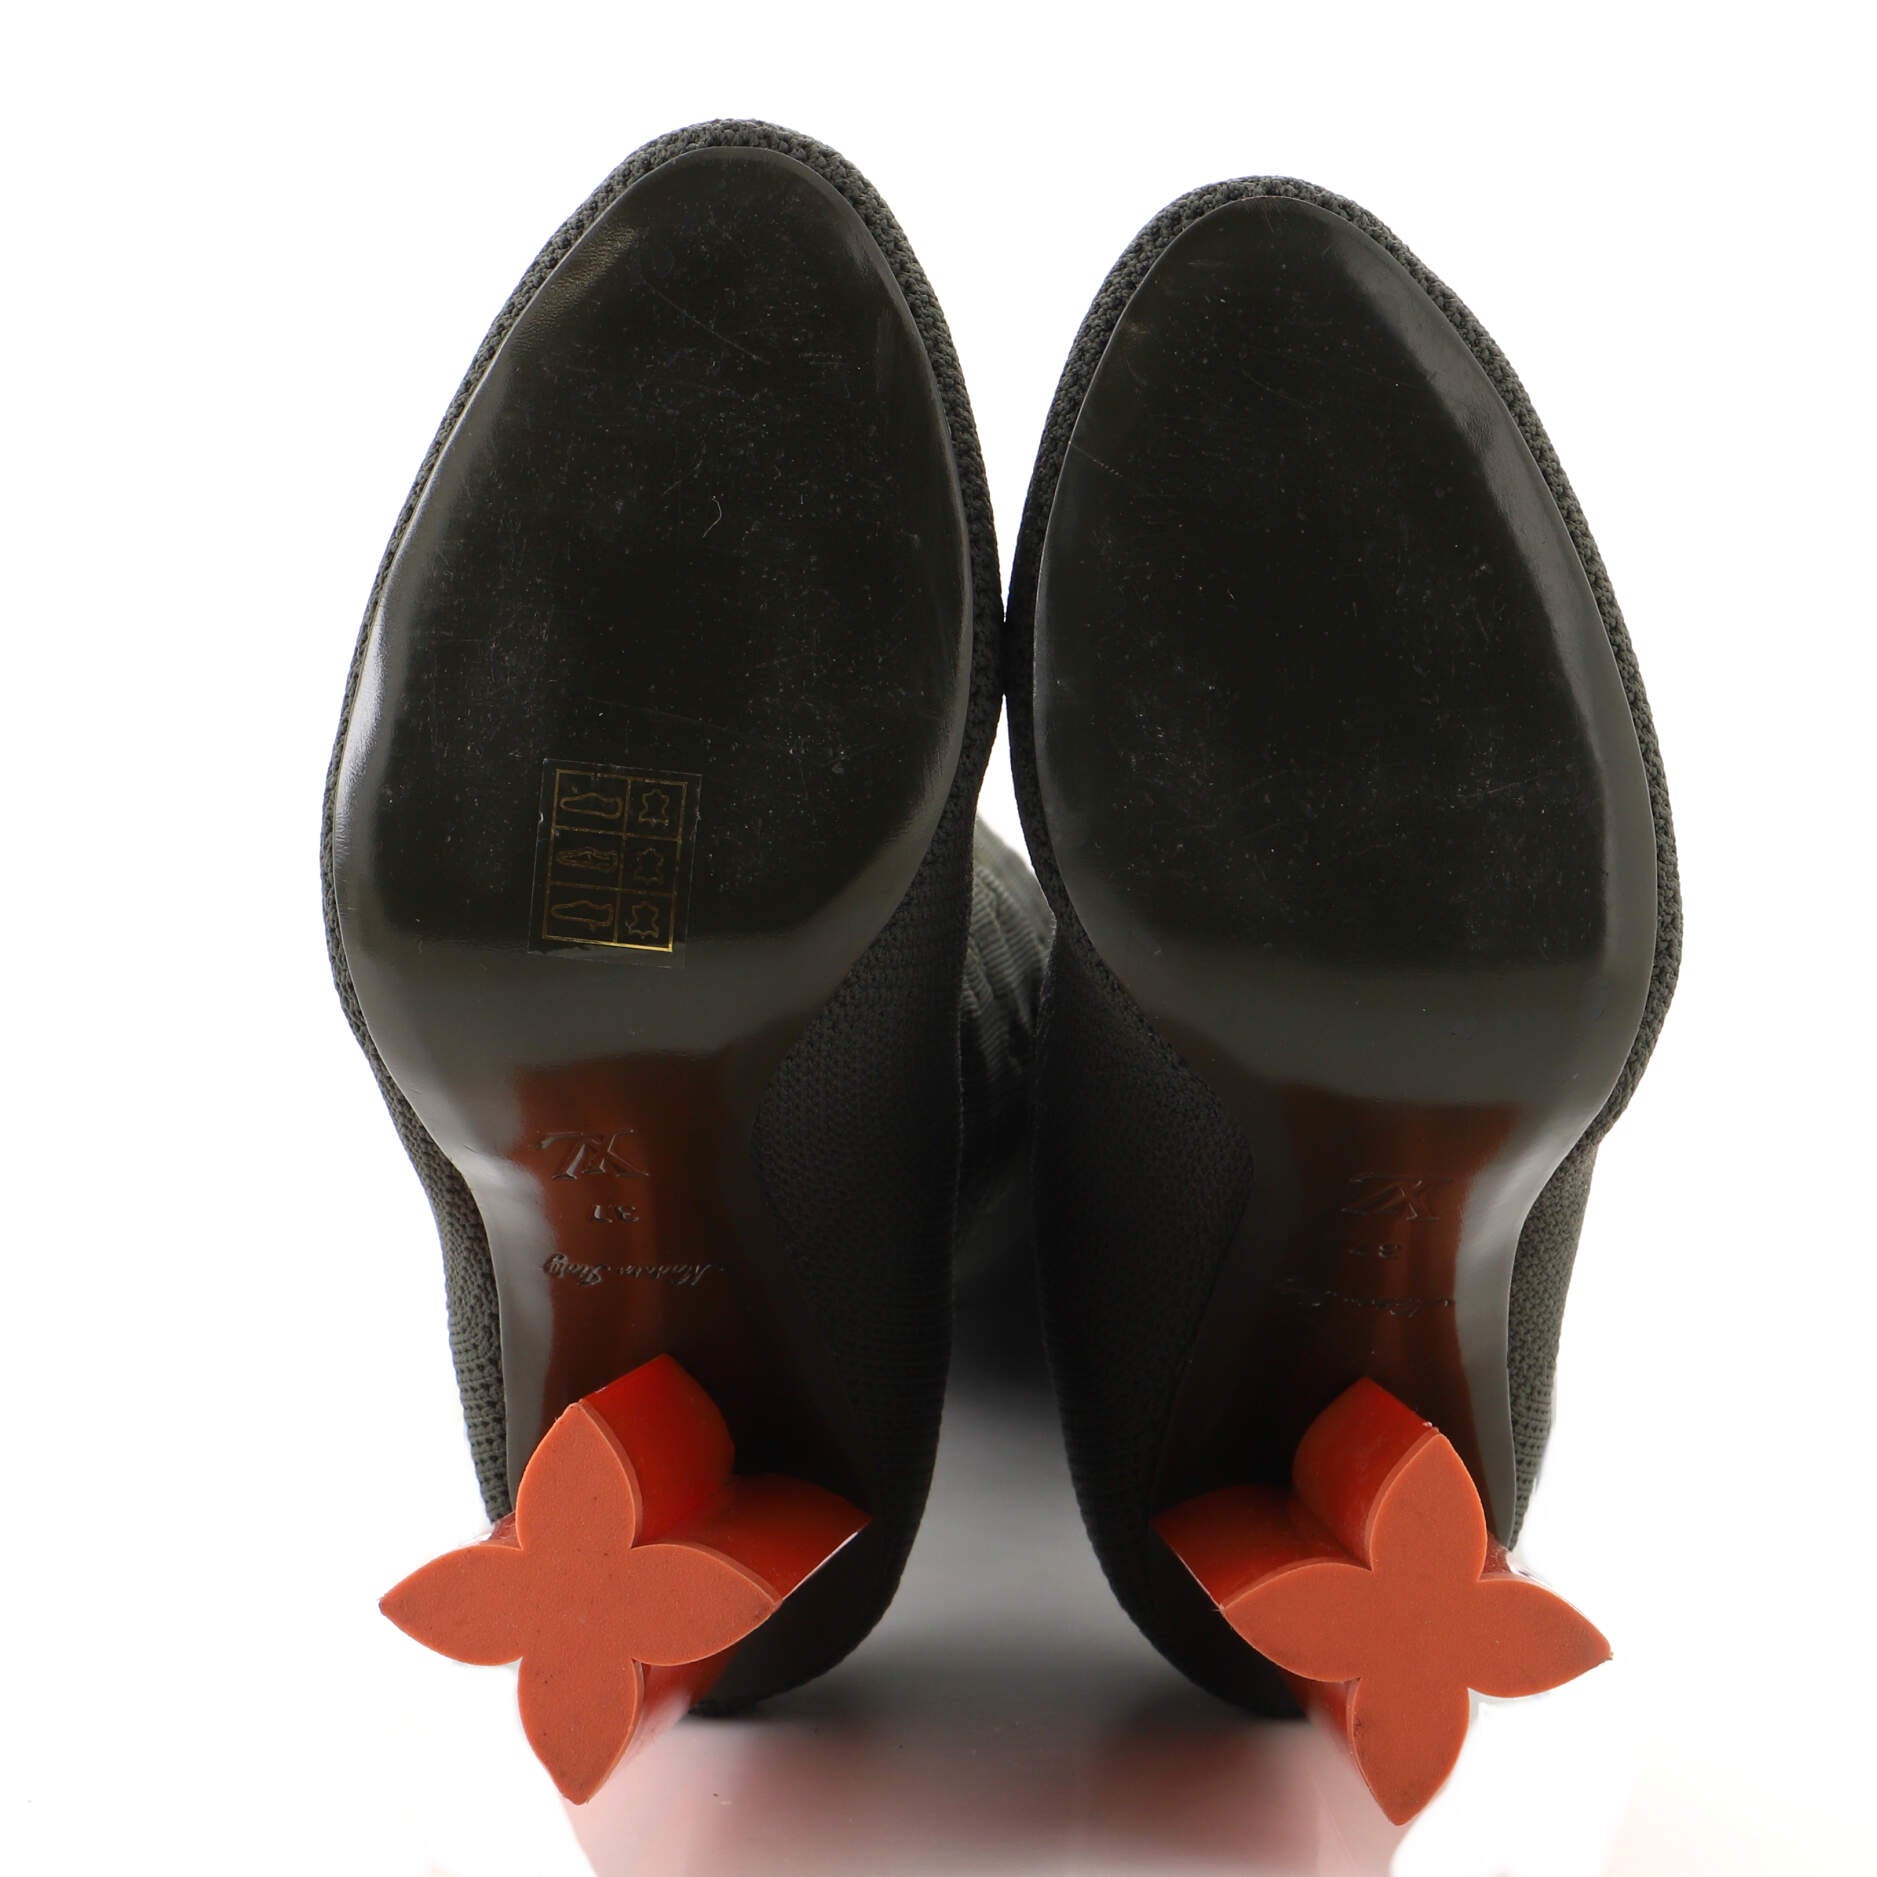 Louis Vuitton Silhouette Thigh Boots LV Monogram Sock Boots